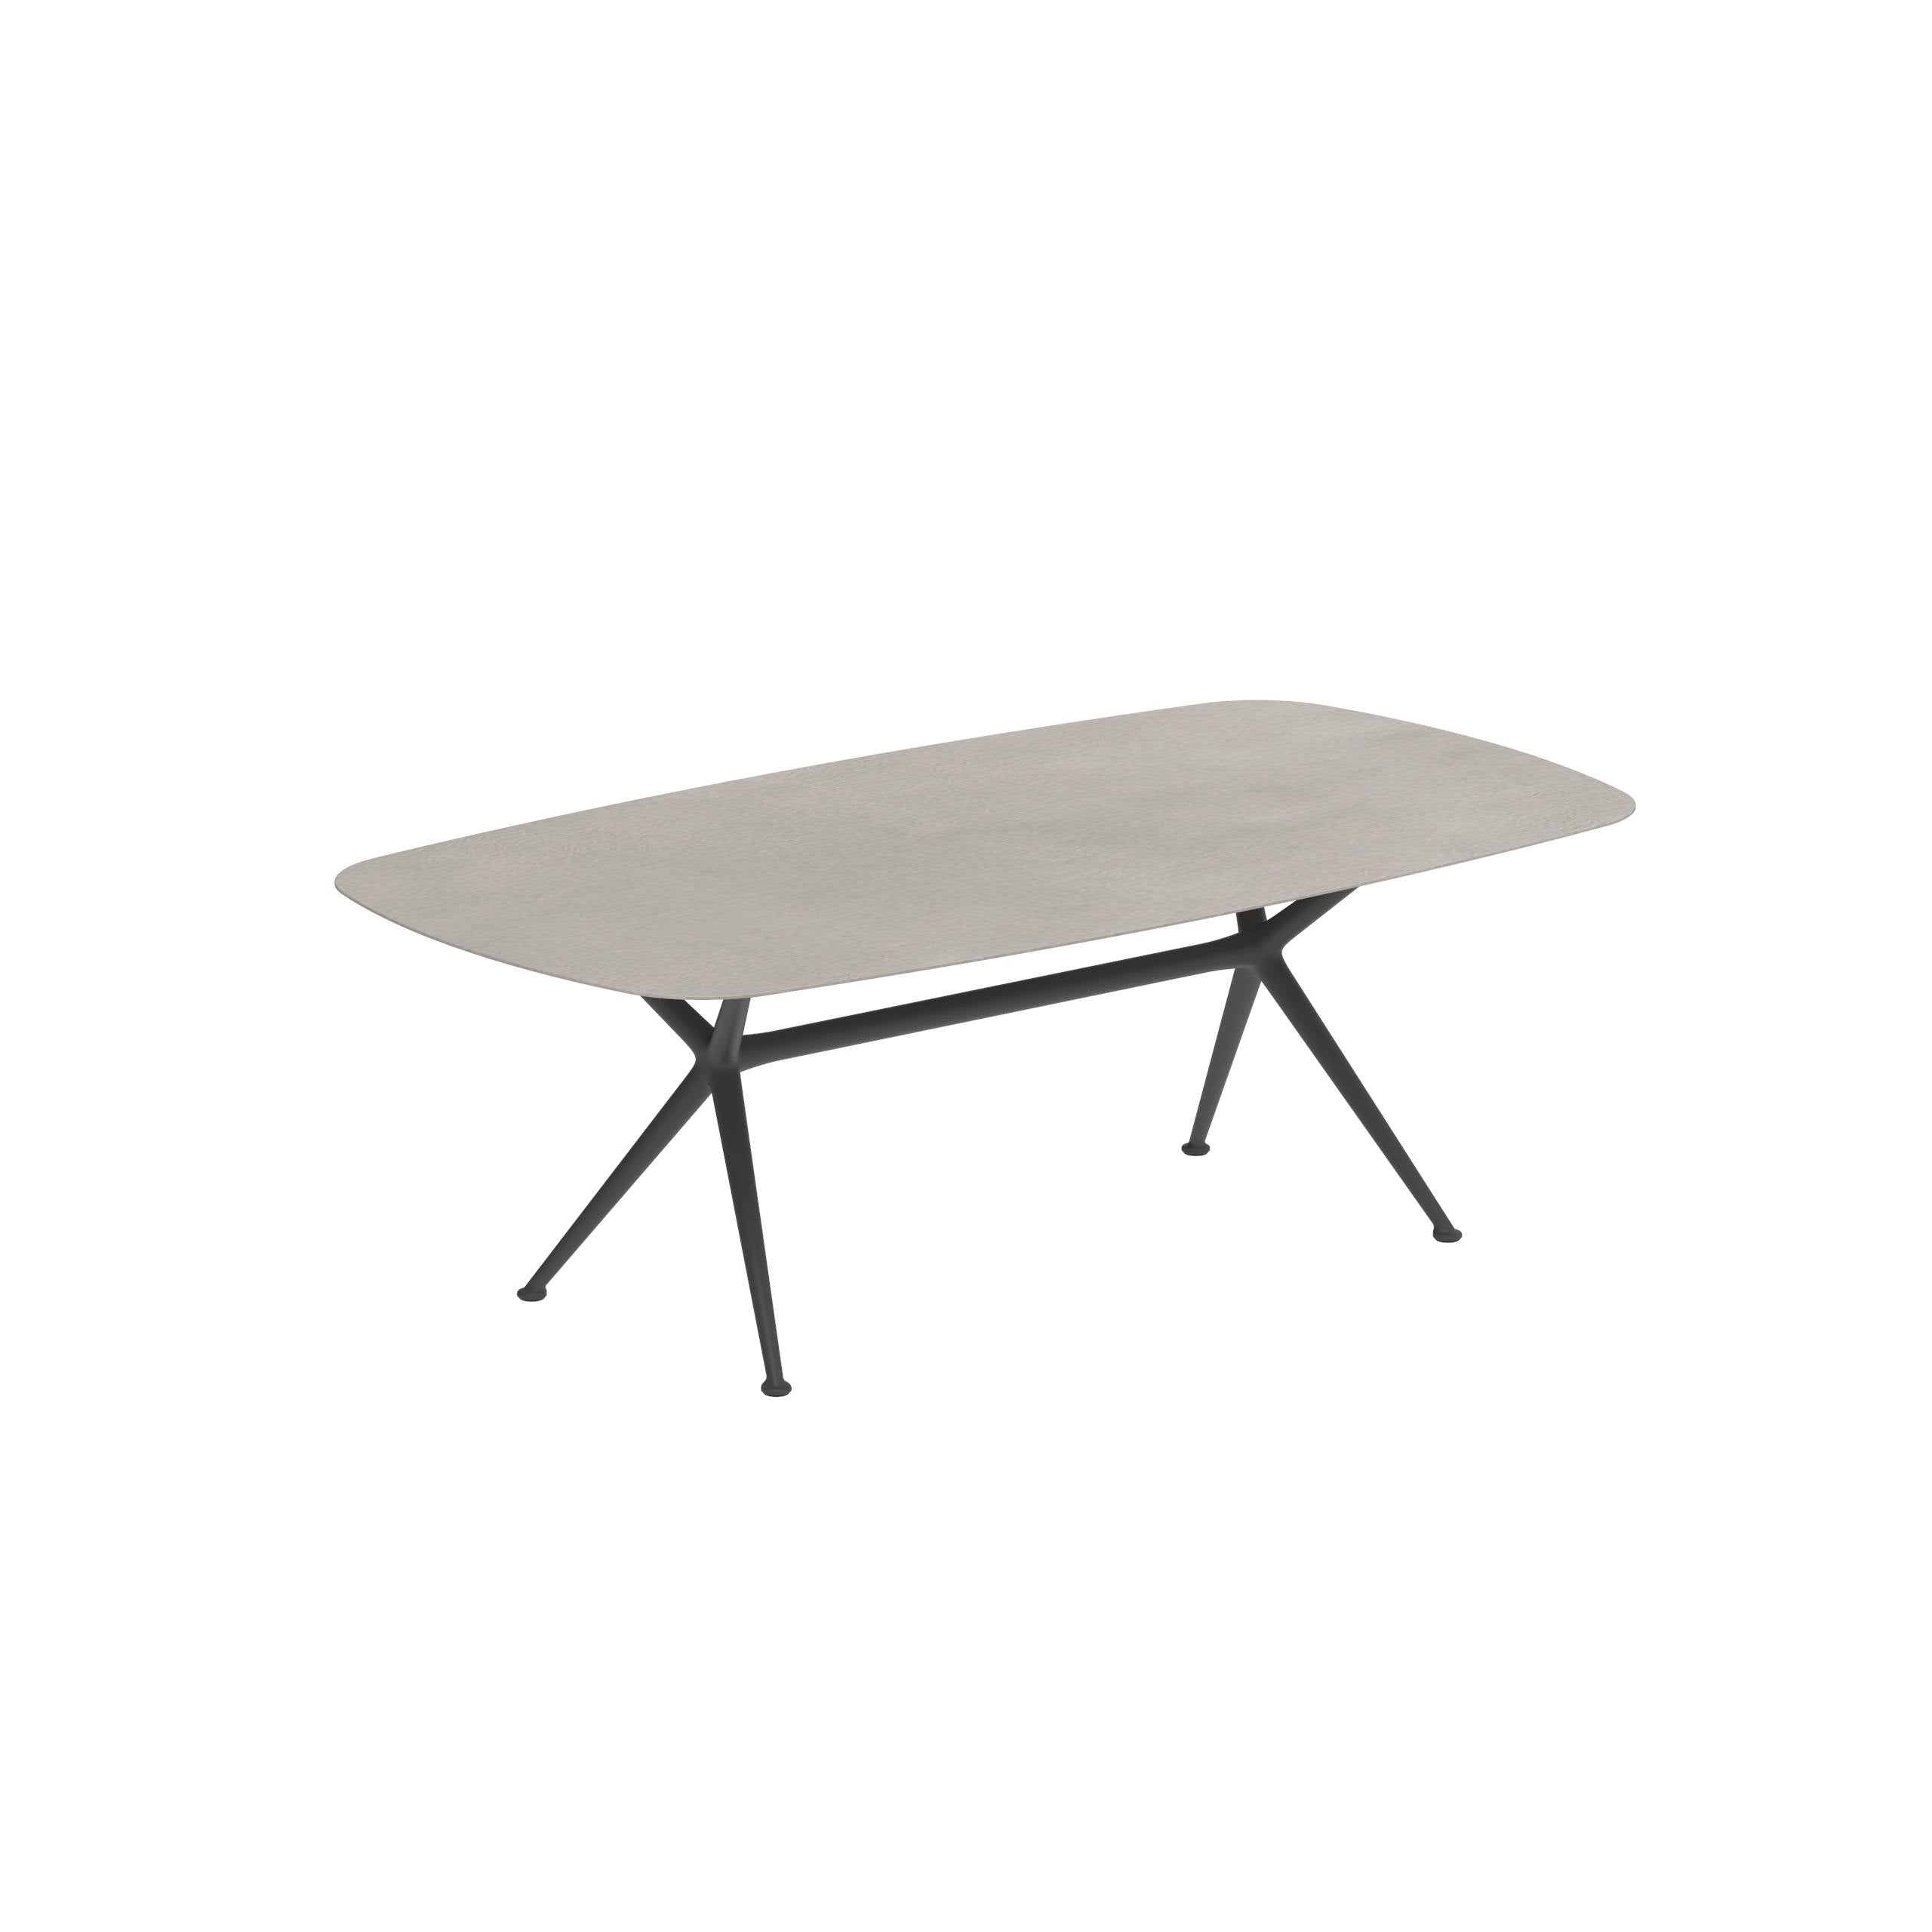 Exes Table 220x120cm Alu Legs Anthracite - Table Top Ceramic Cemento Luminoso